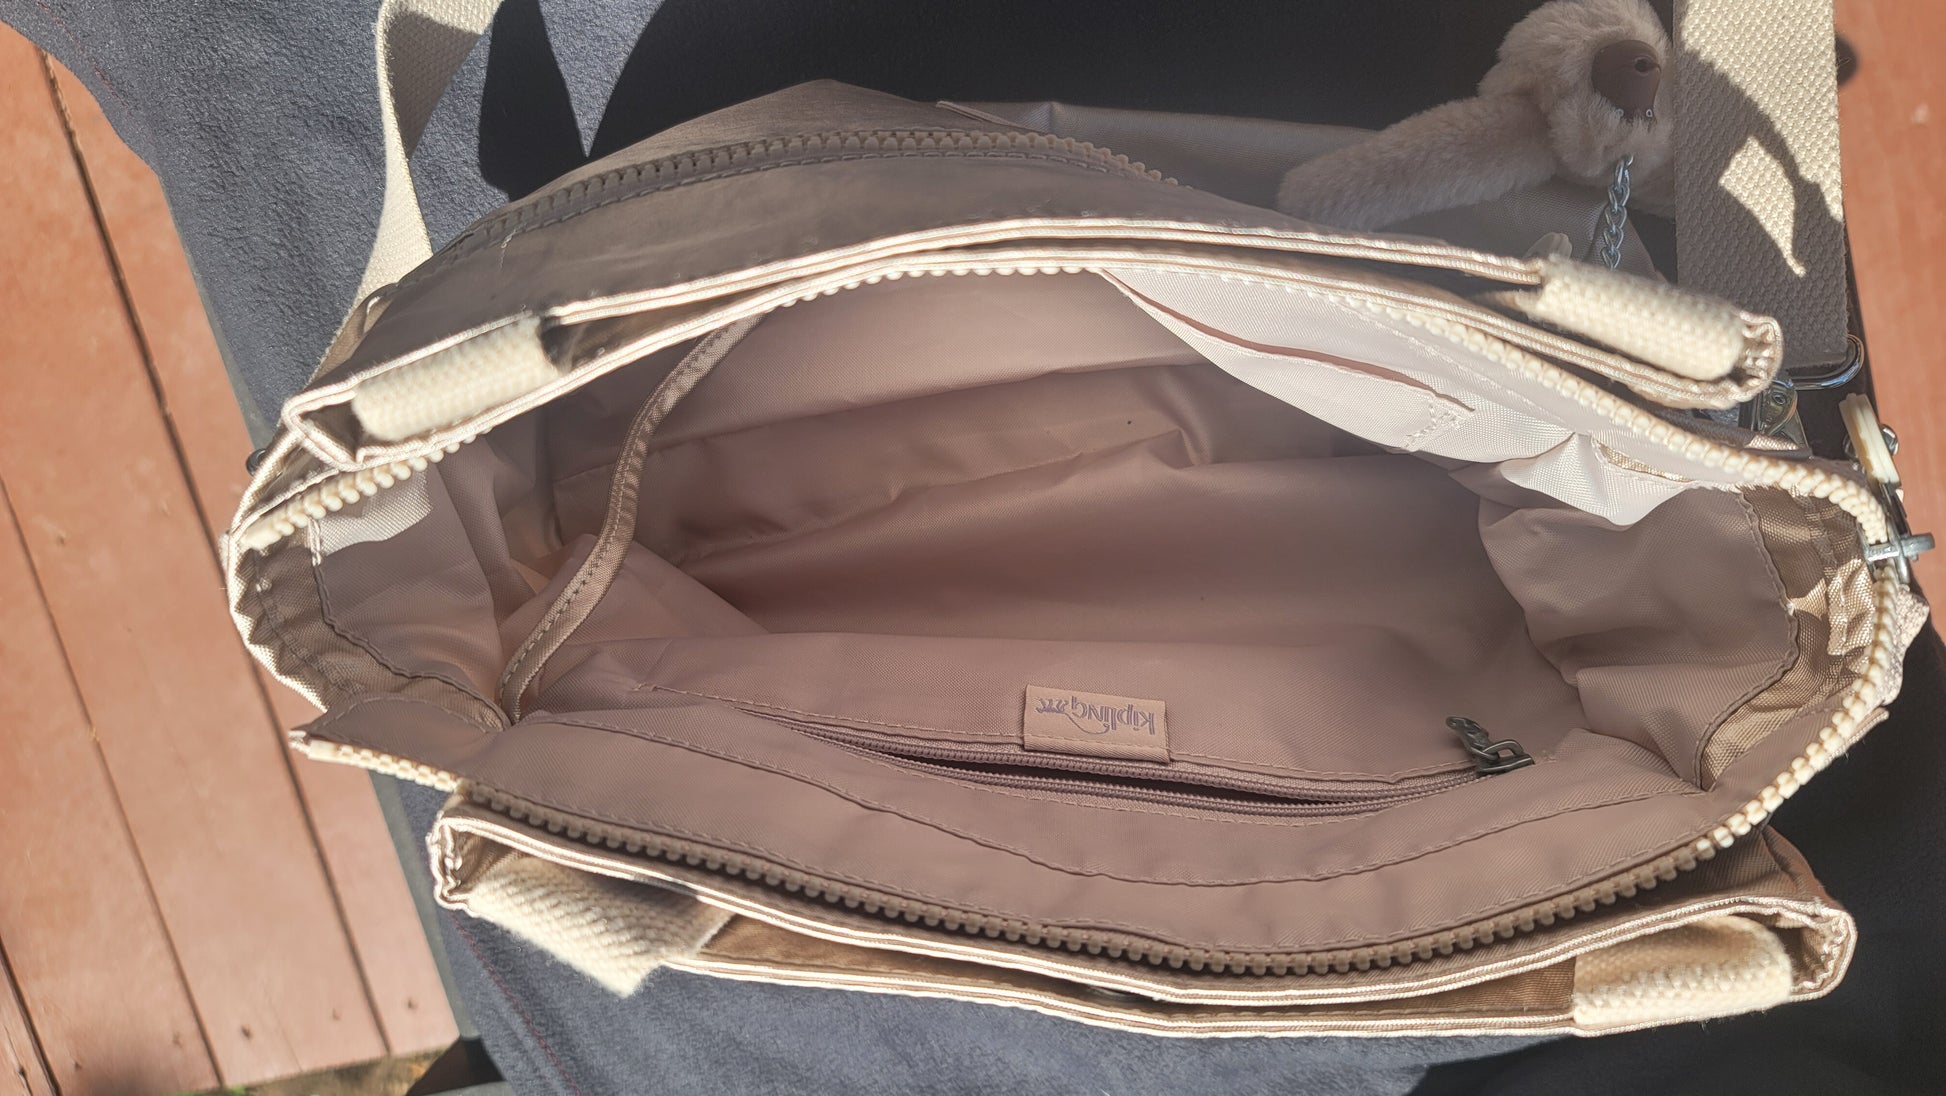 Kipling Crossbody Bag | Kipling bags, Metallic backpacks, Crossbody bag